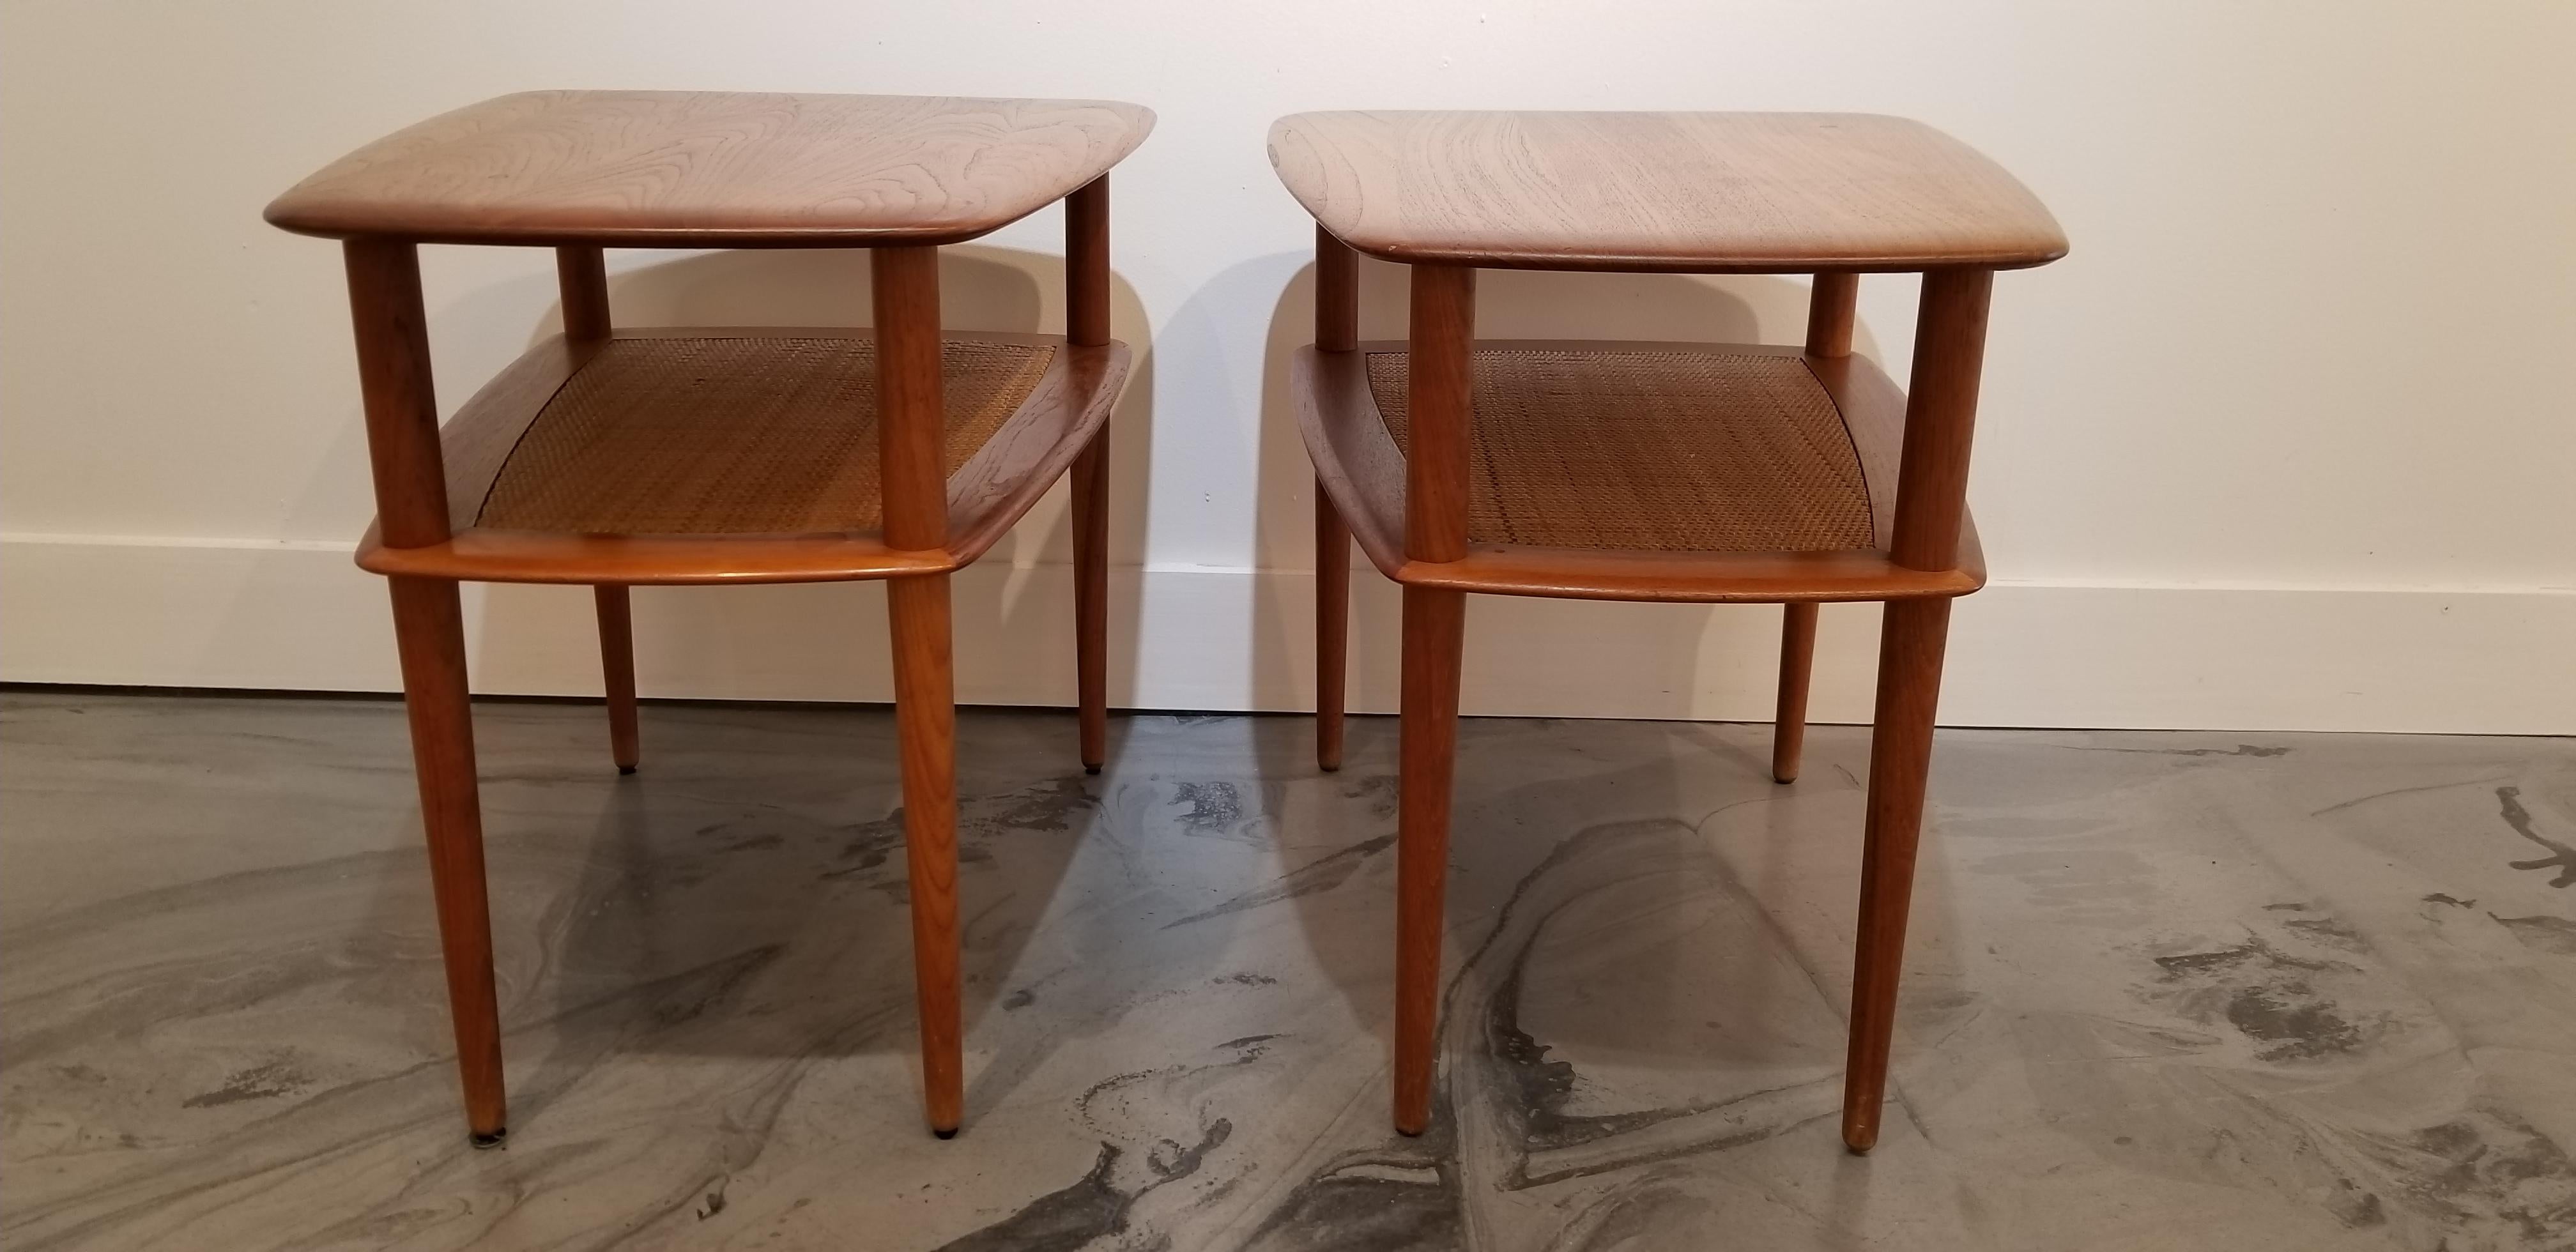 Scandinavian Modern Peter Hvidt Teak Danish Modern End Tables, A Pair For Sale